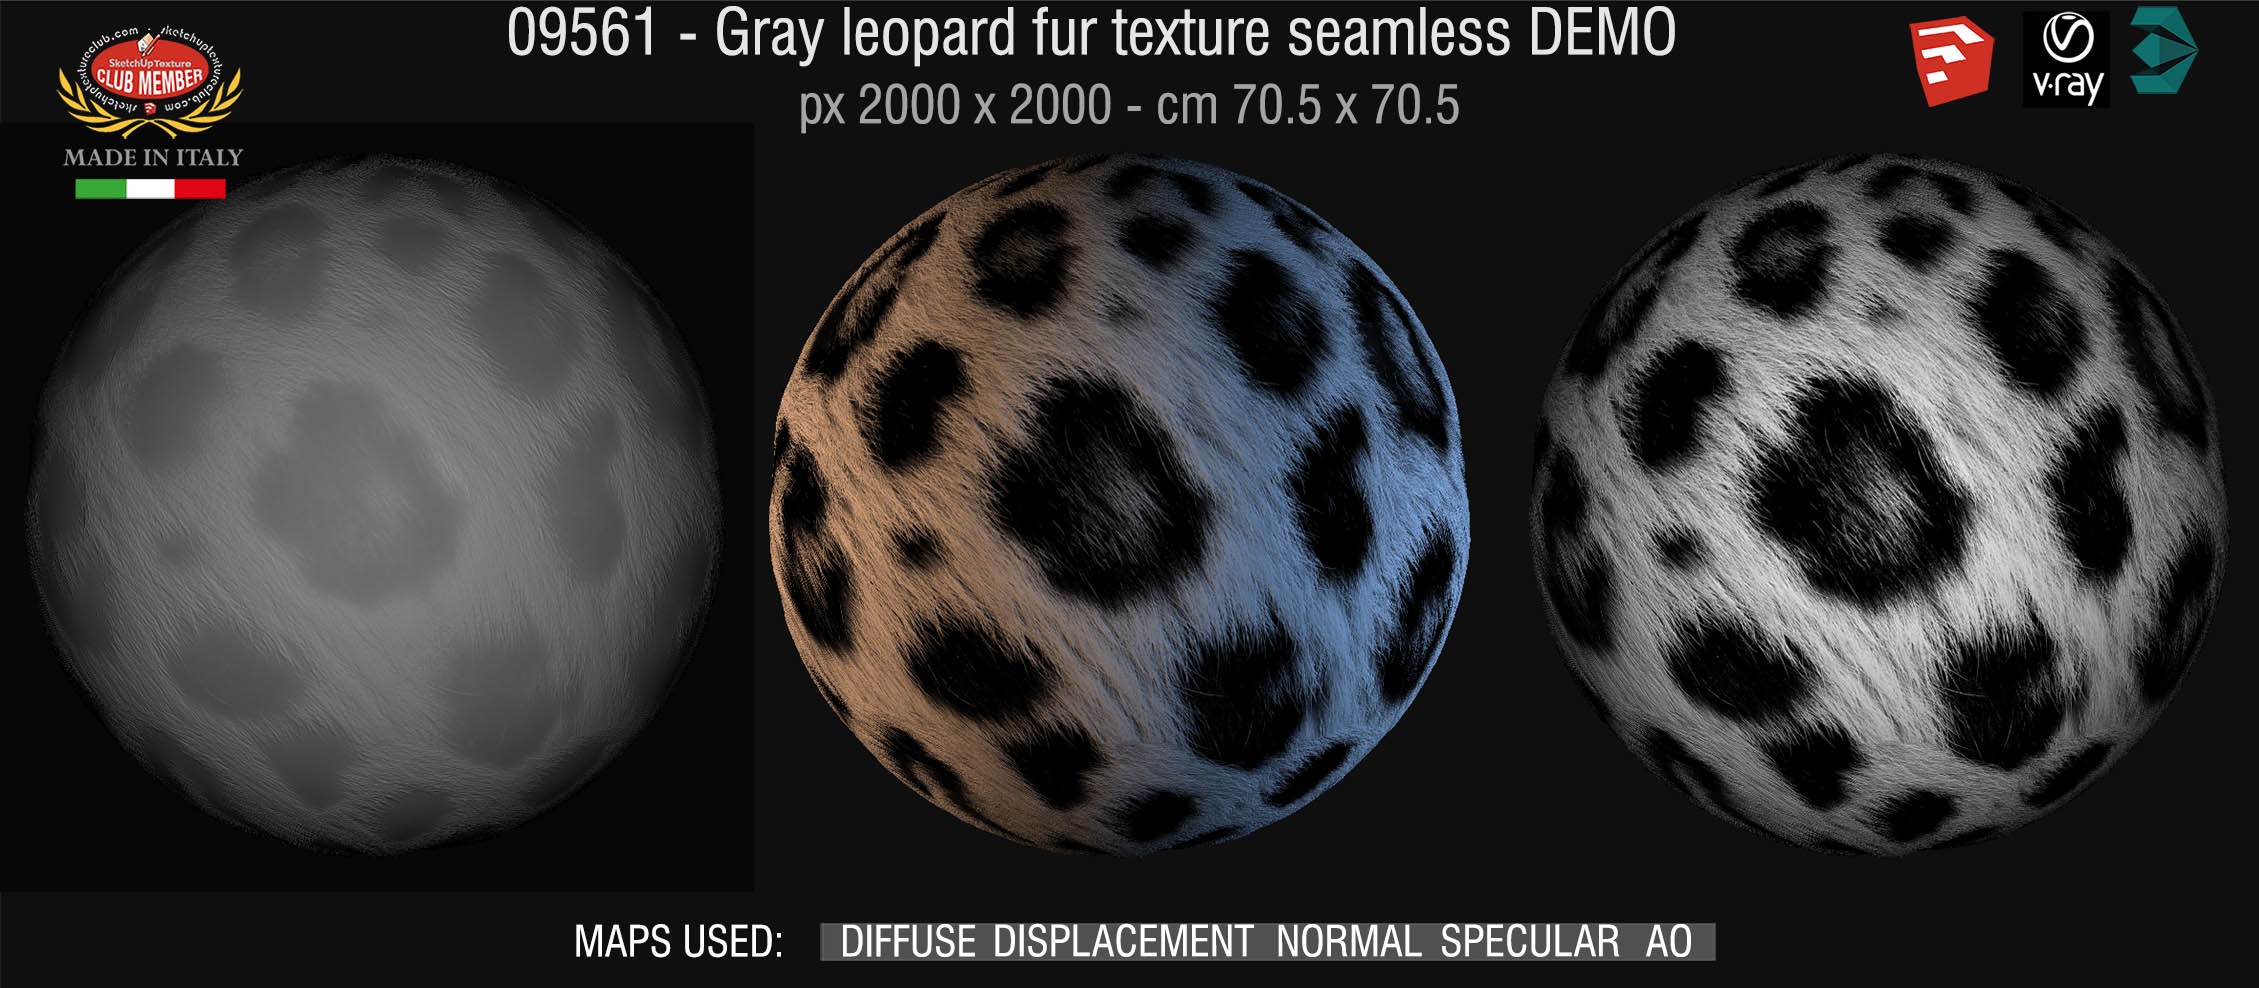 09561 HR Gray leopard fur texture + maps DEMO